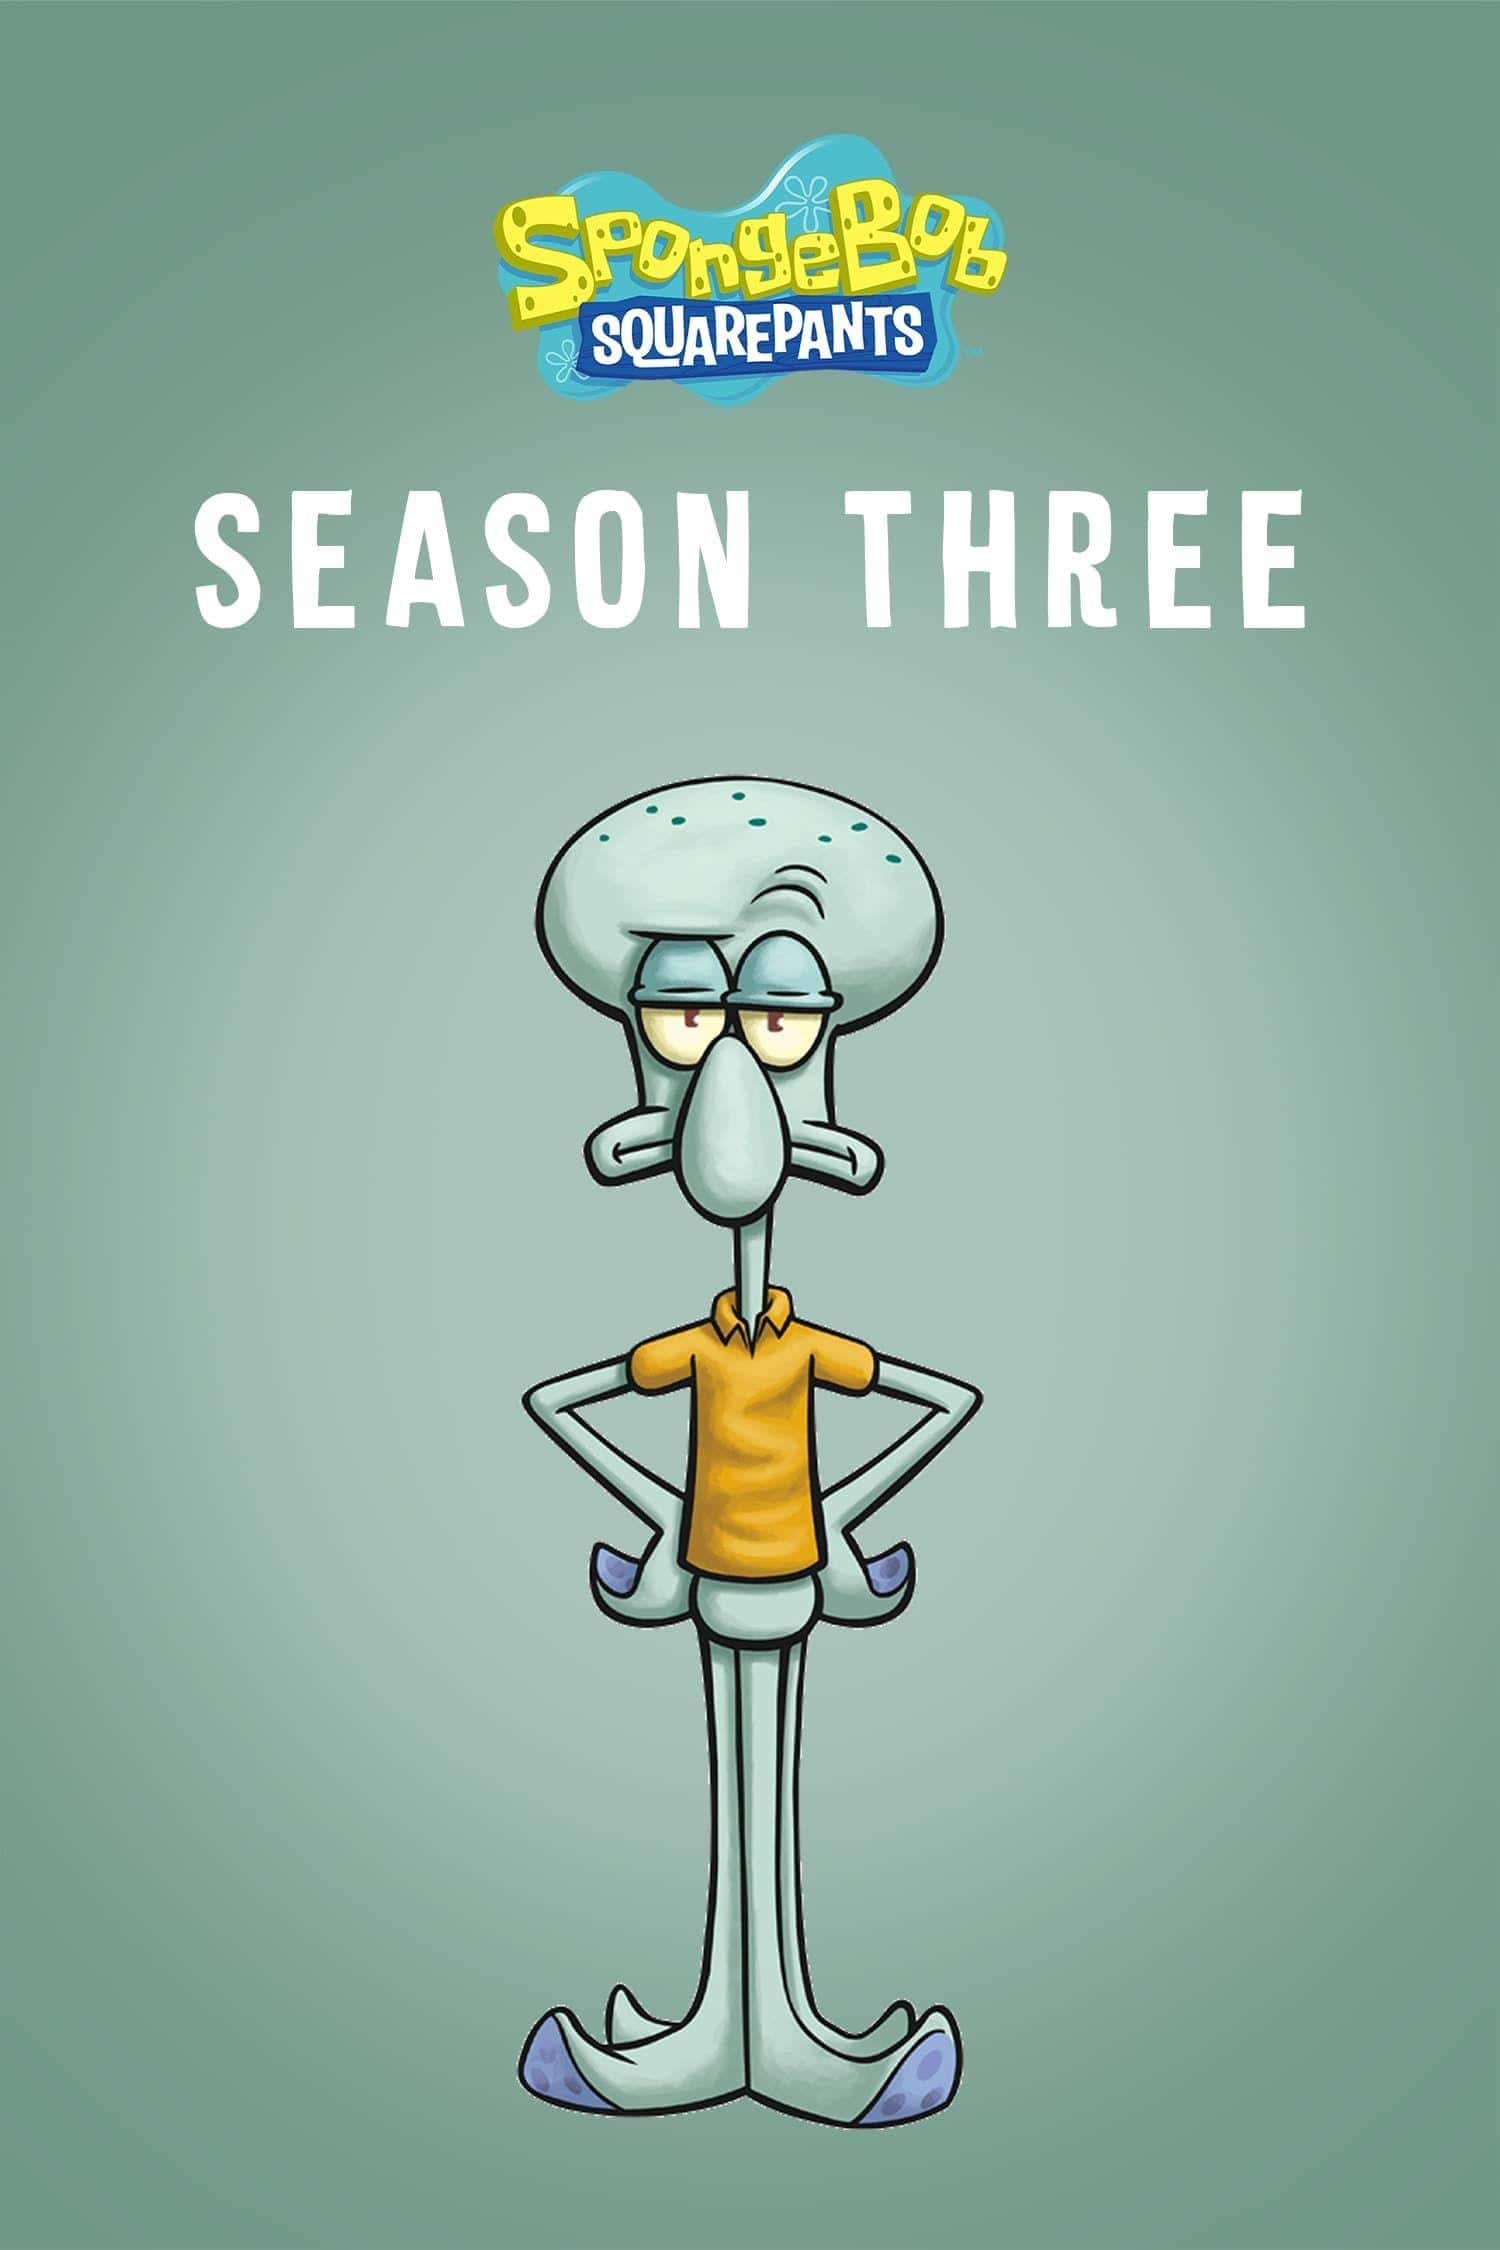 spongebob squarepants episodes season 3